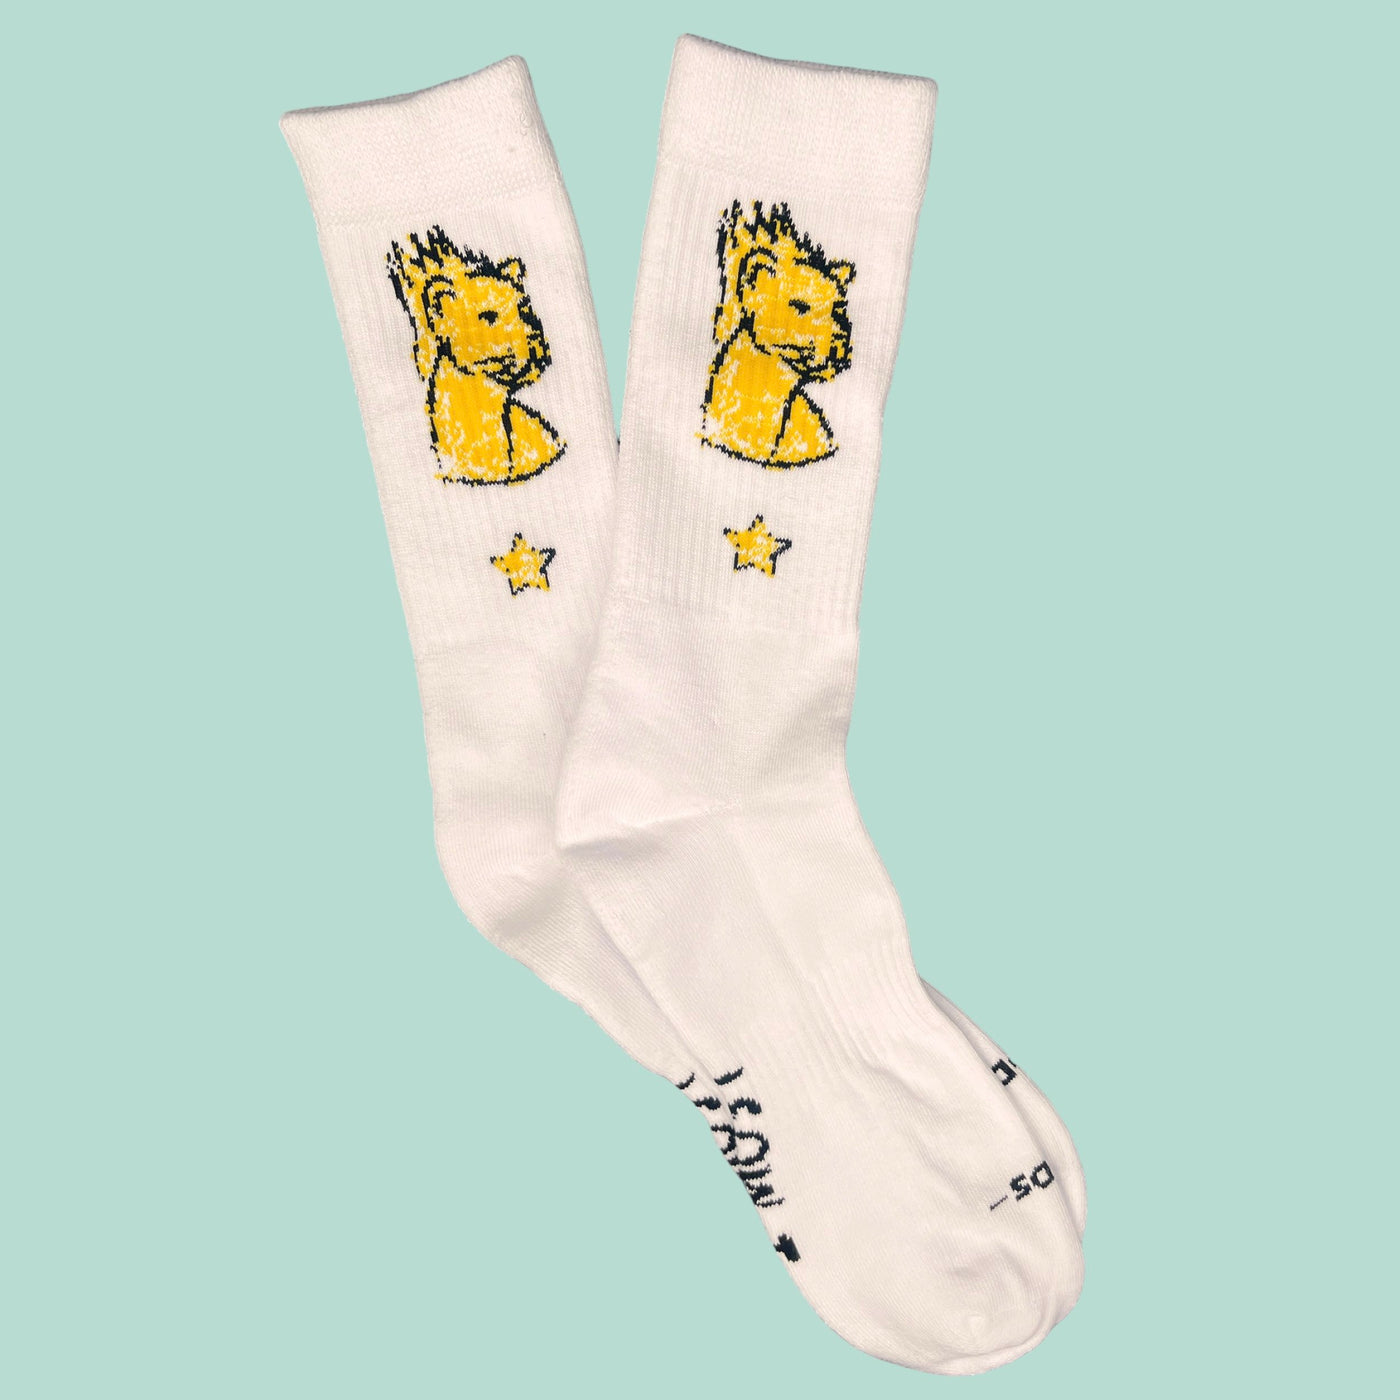 Athletic socks - Lionel - I must